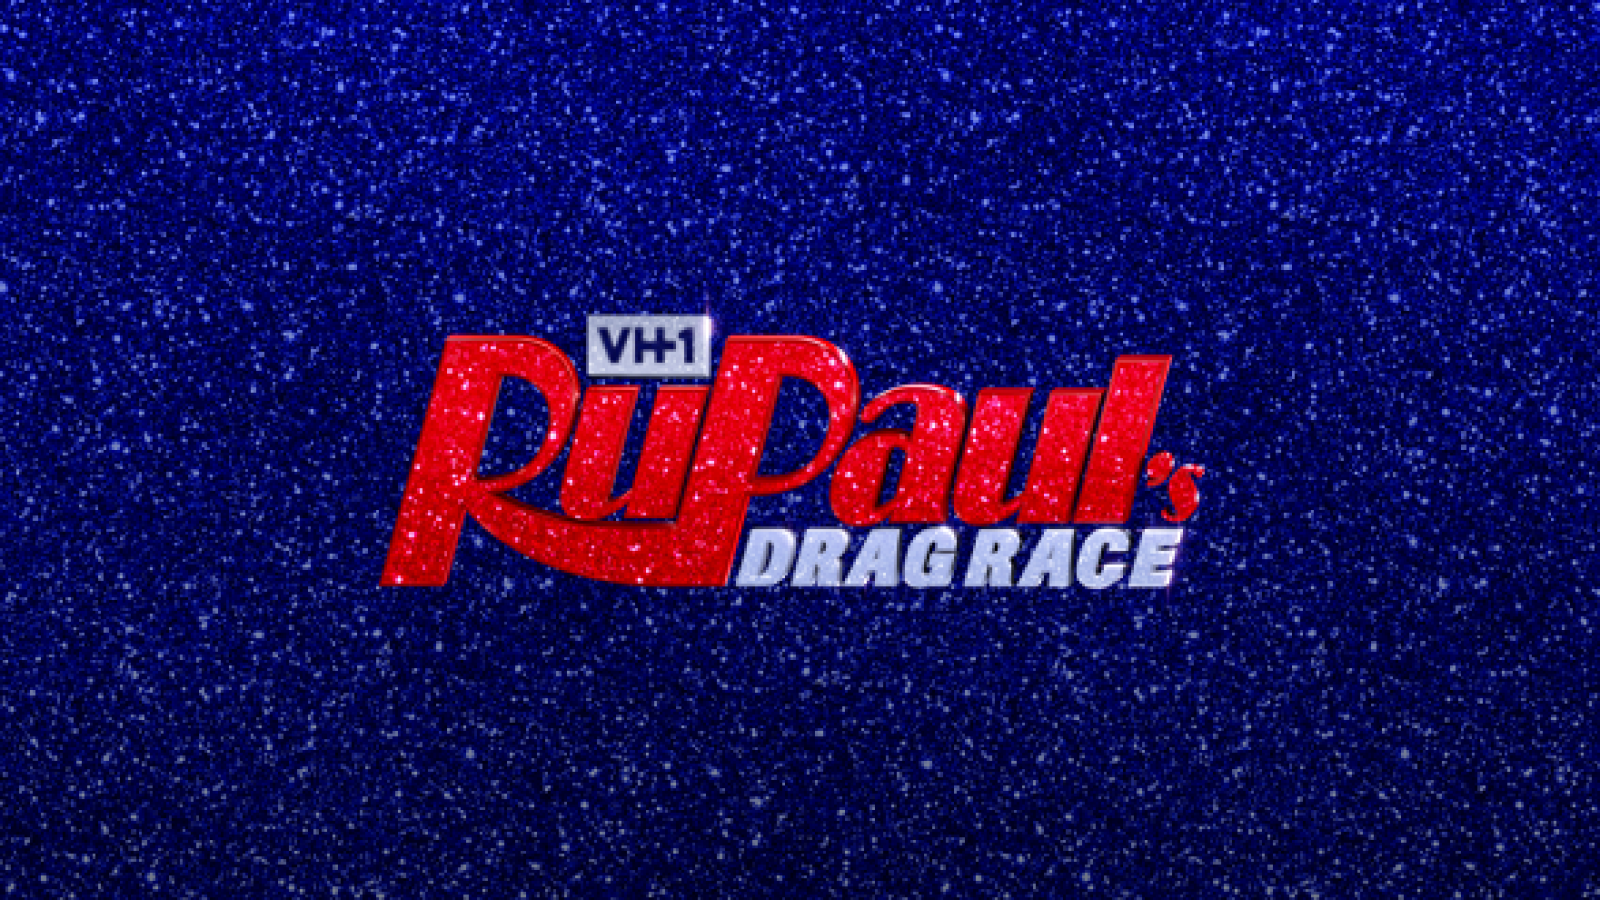 Drag Race Season 12